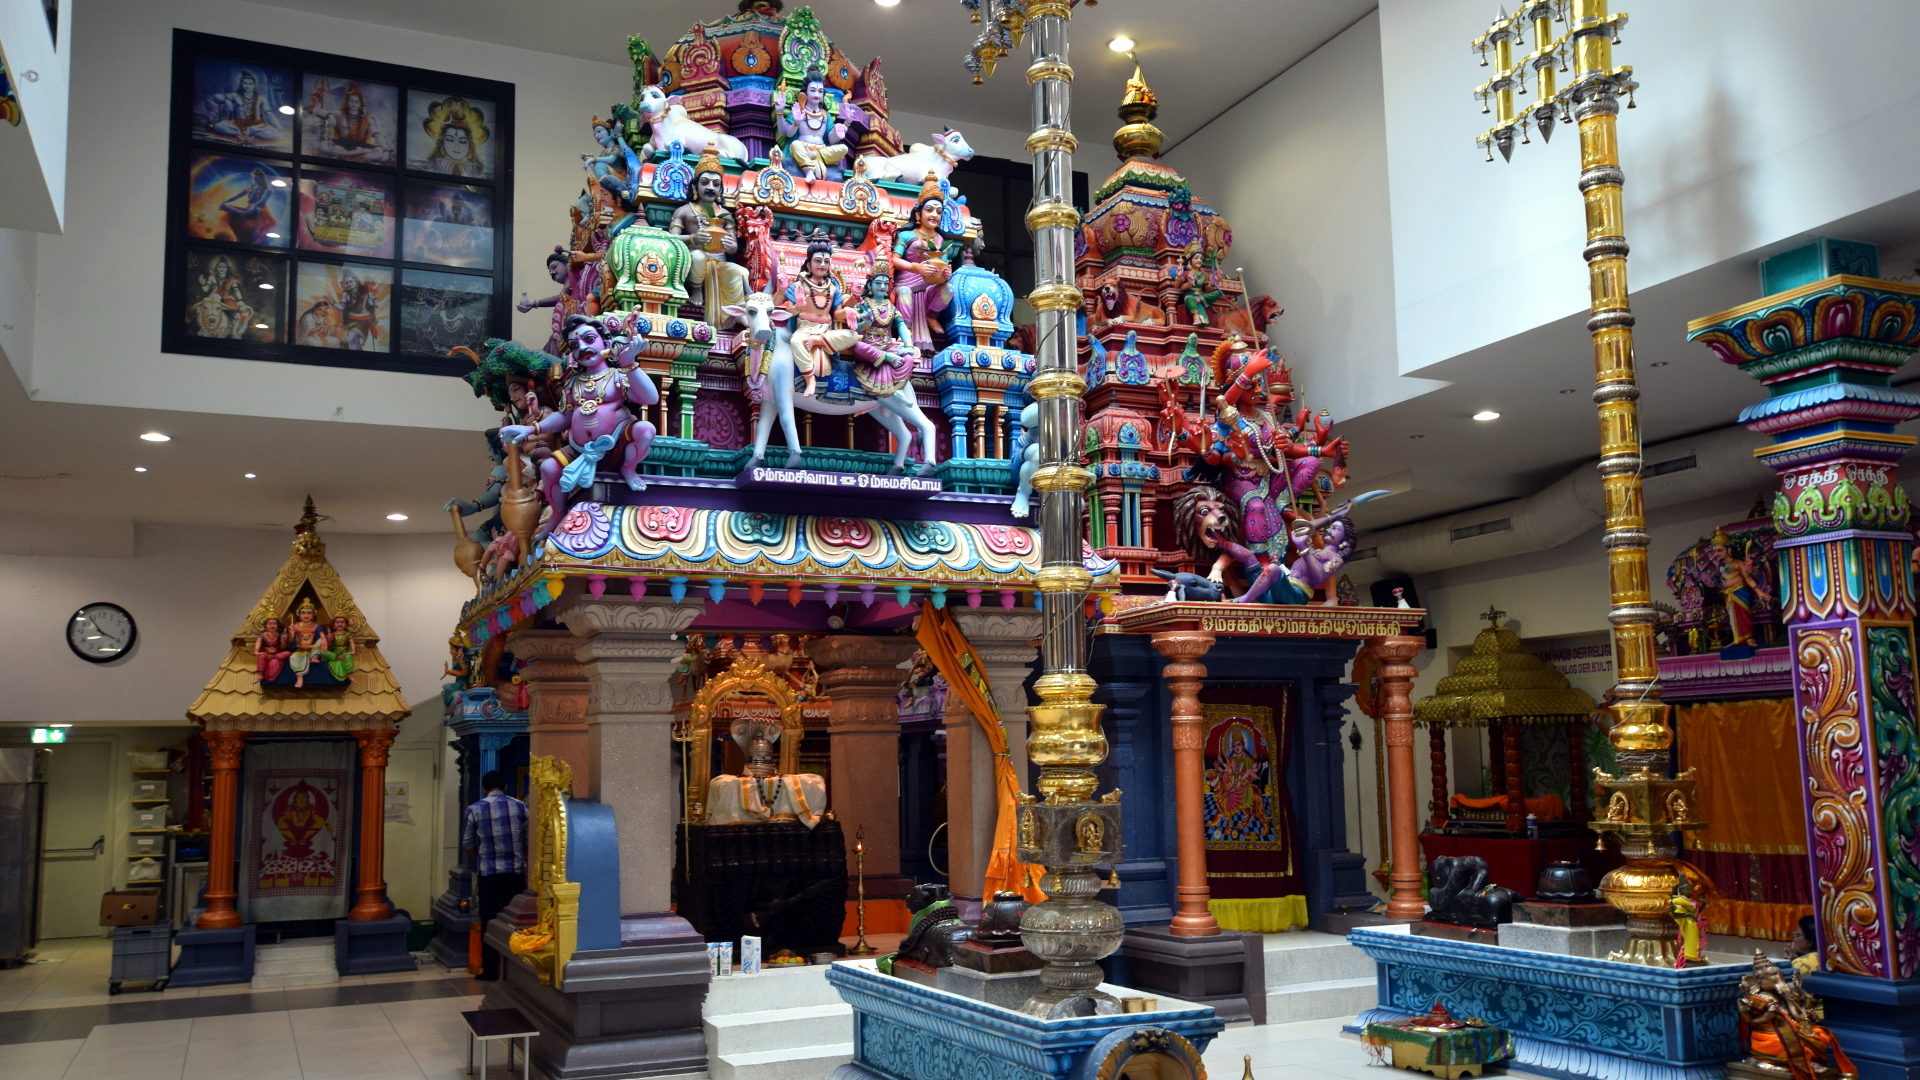 Krishna-Tempel im Haus der Religionen